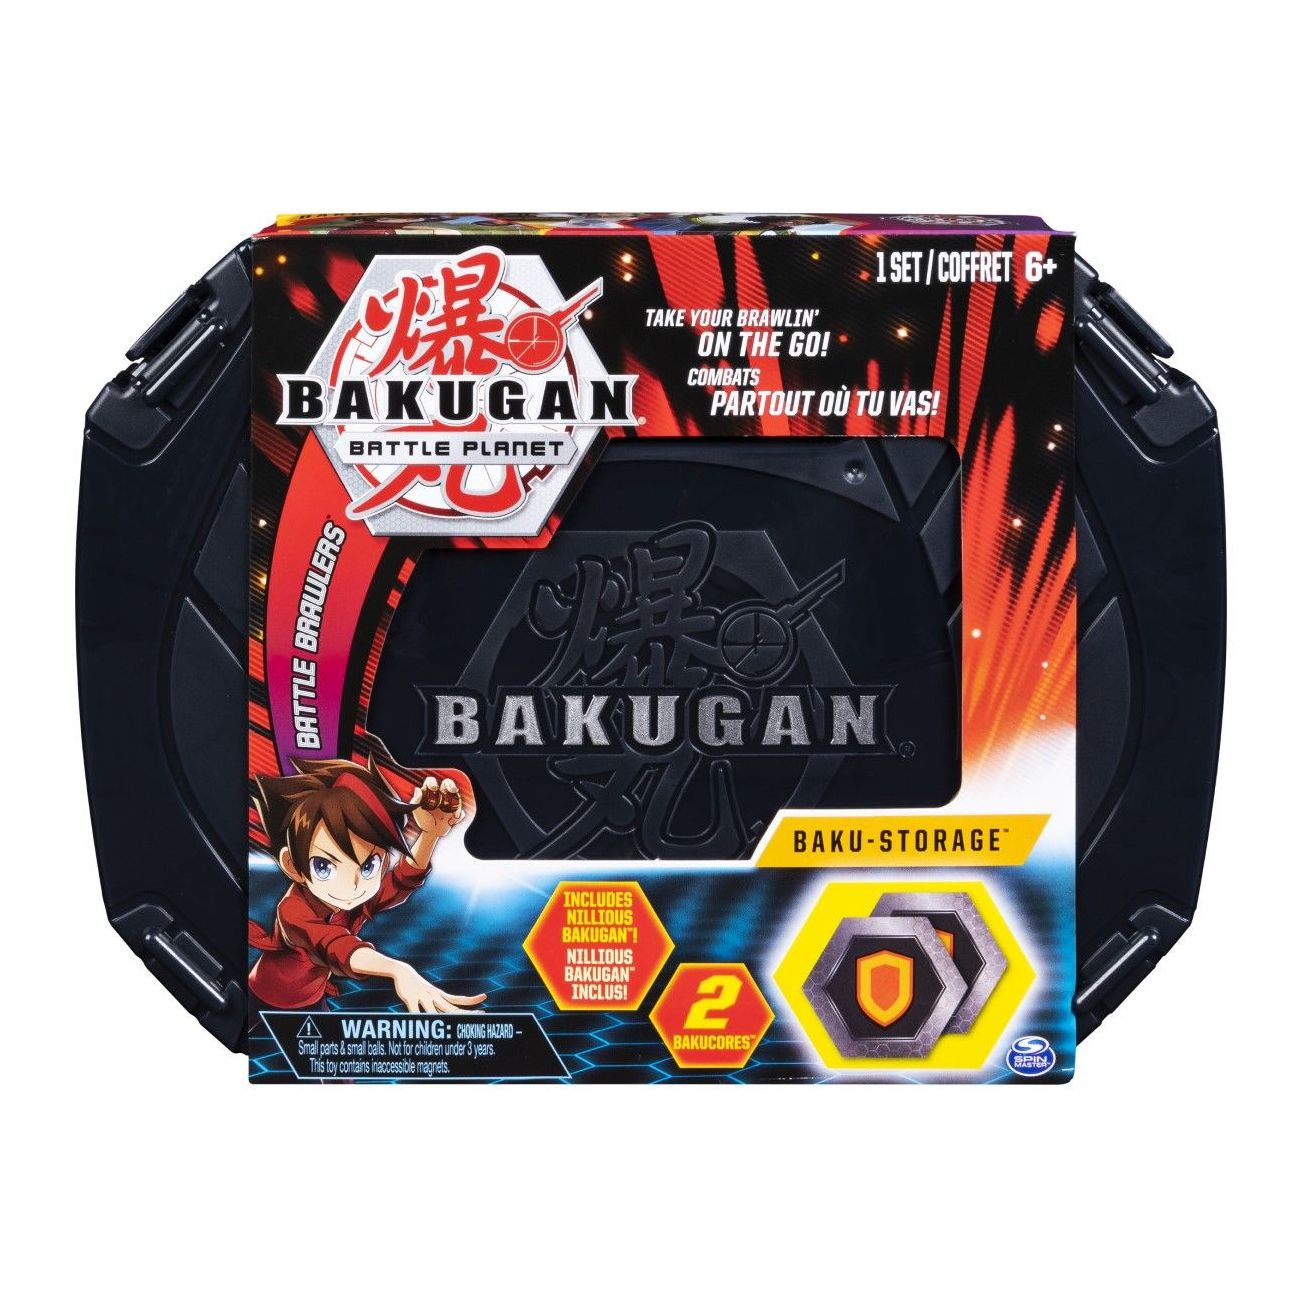 Bakugan Storage Case